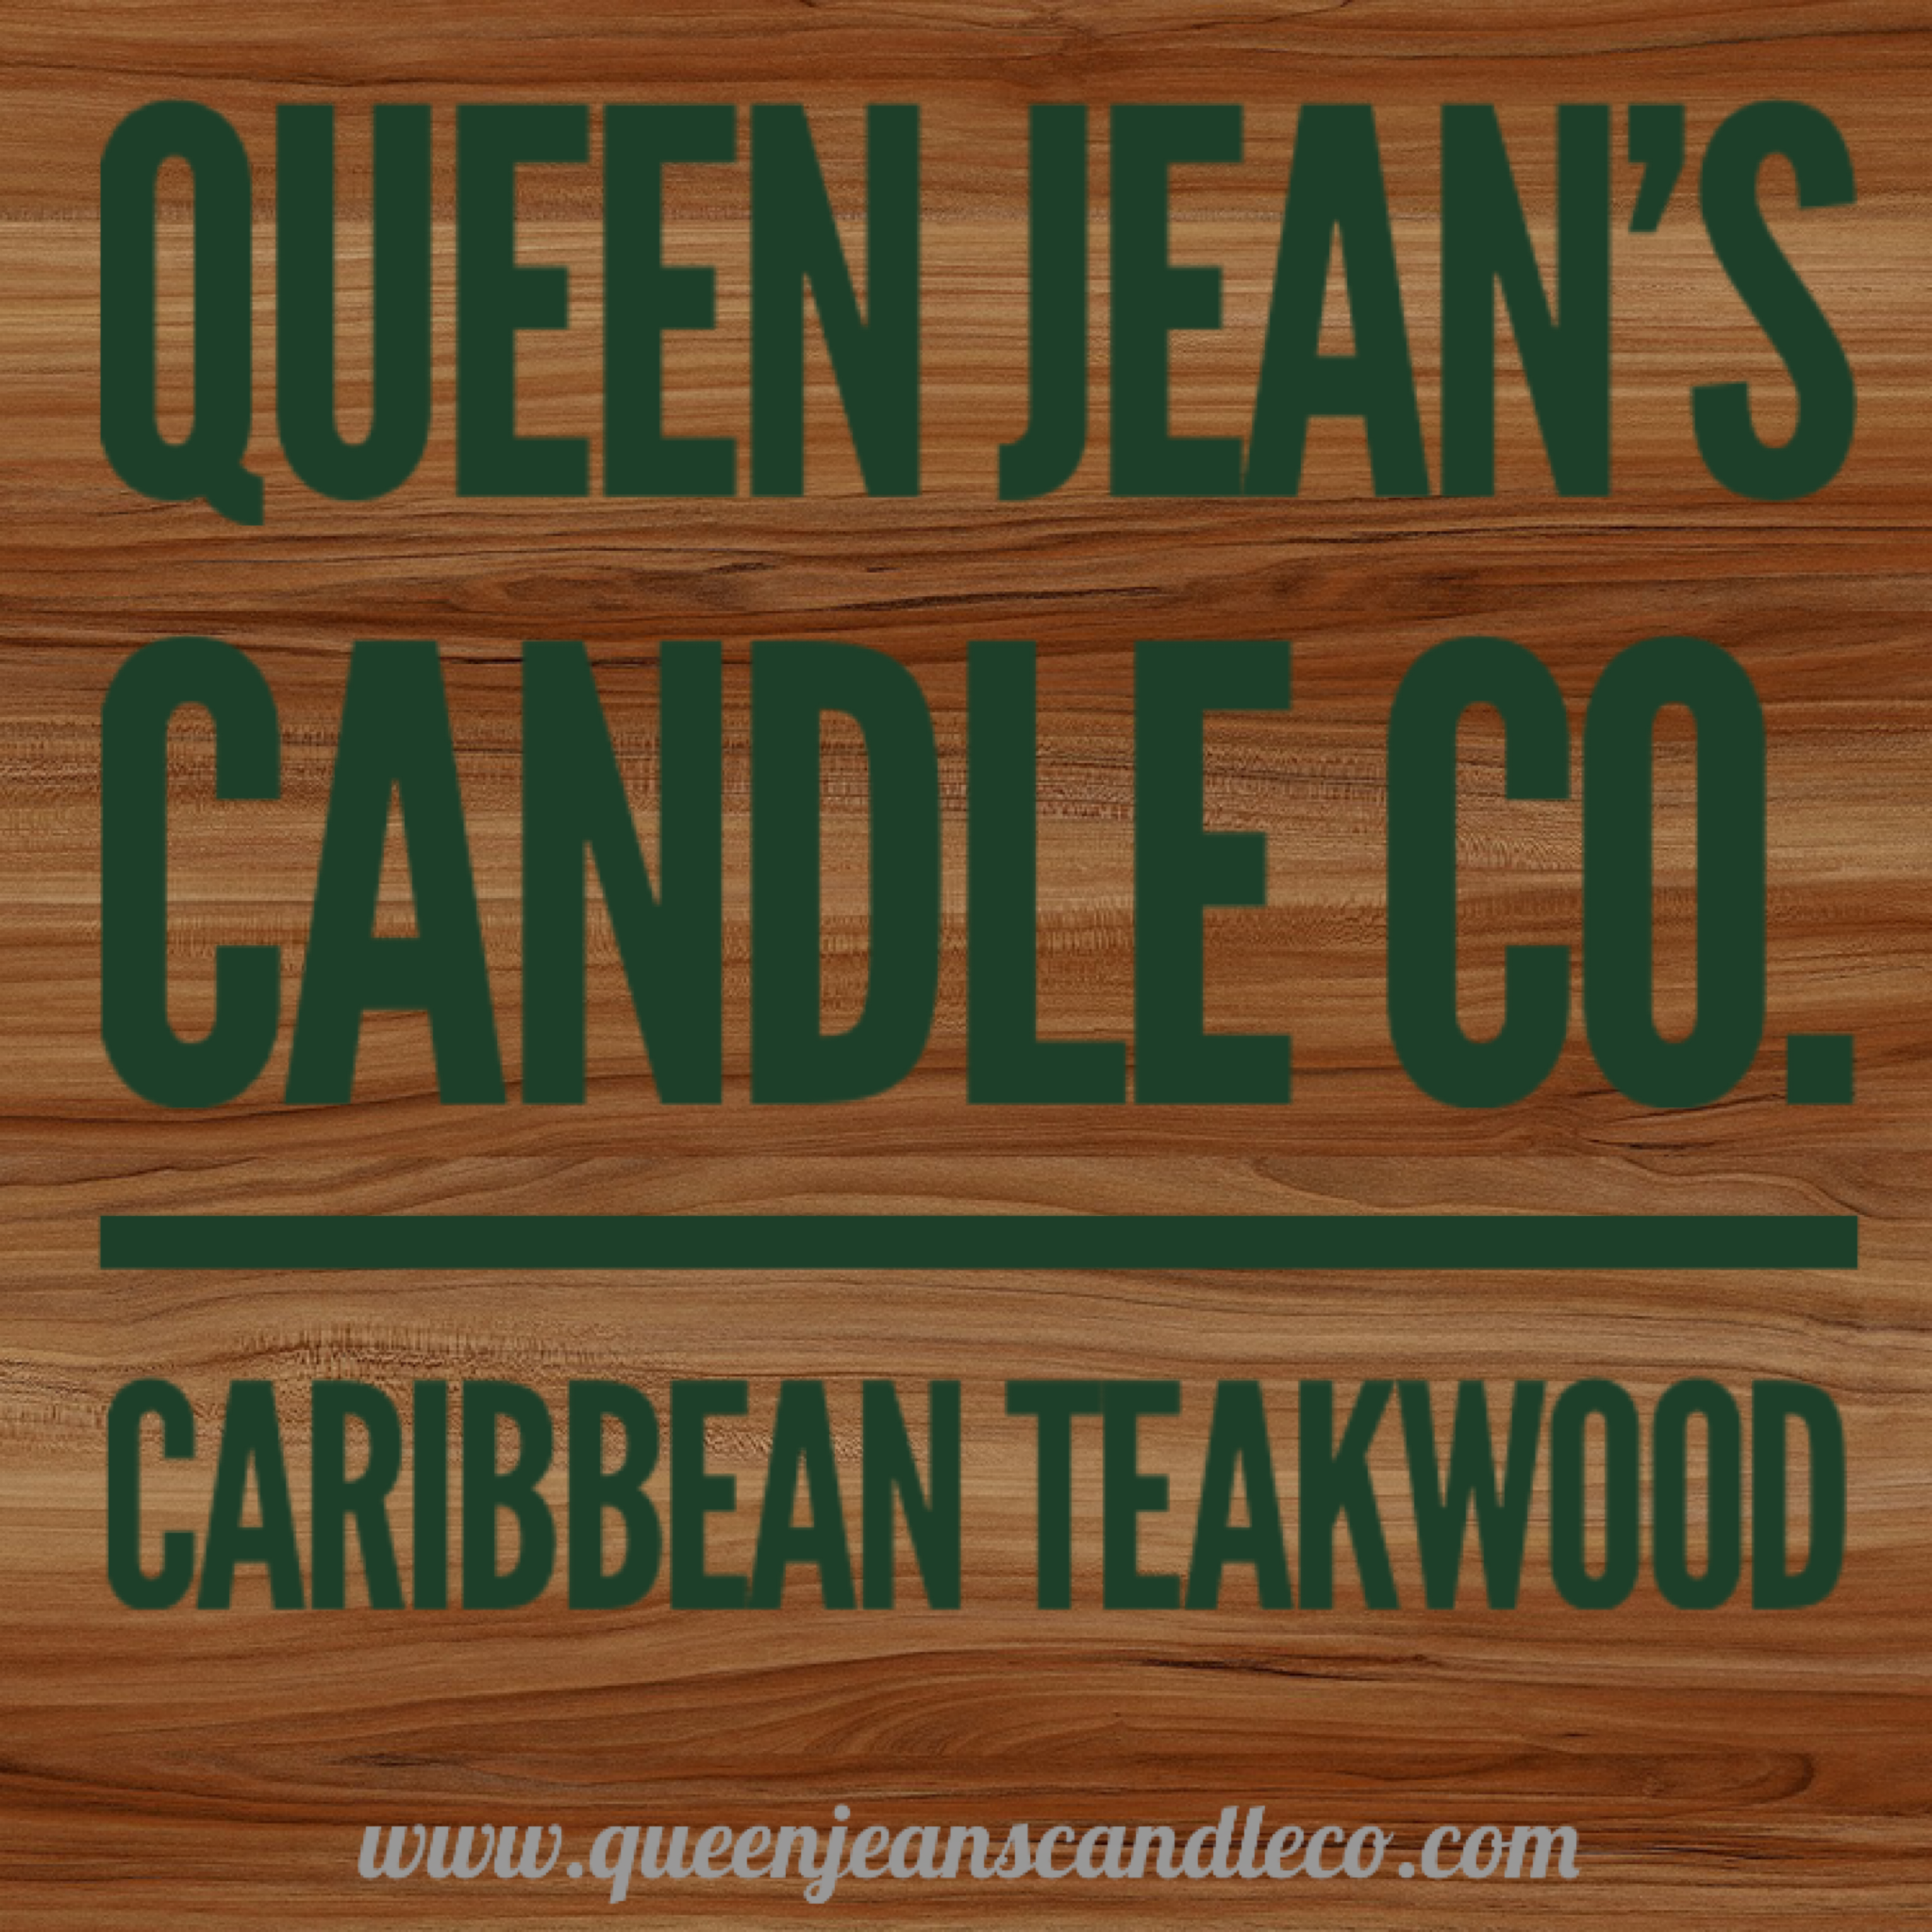 Caribbean Teakwood